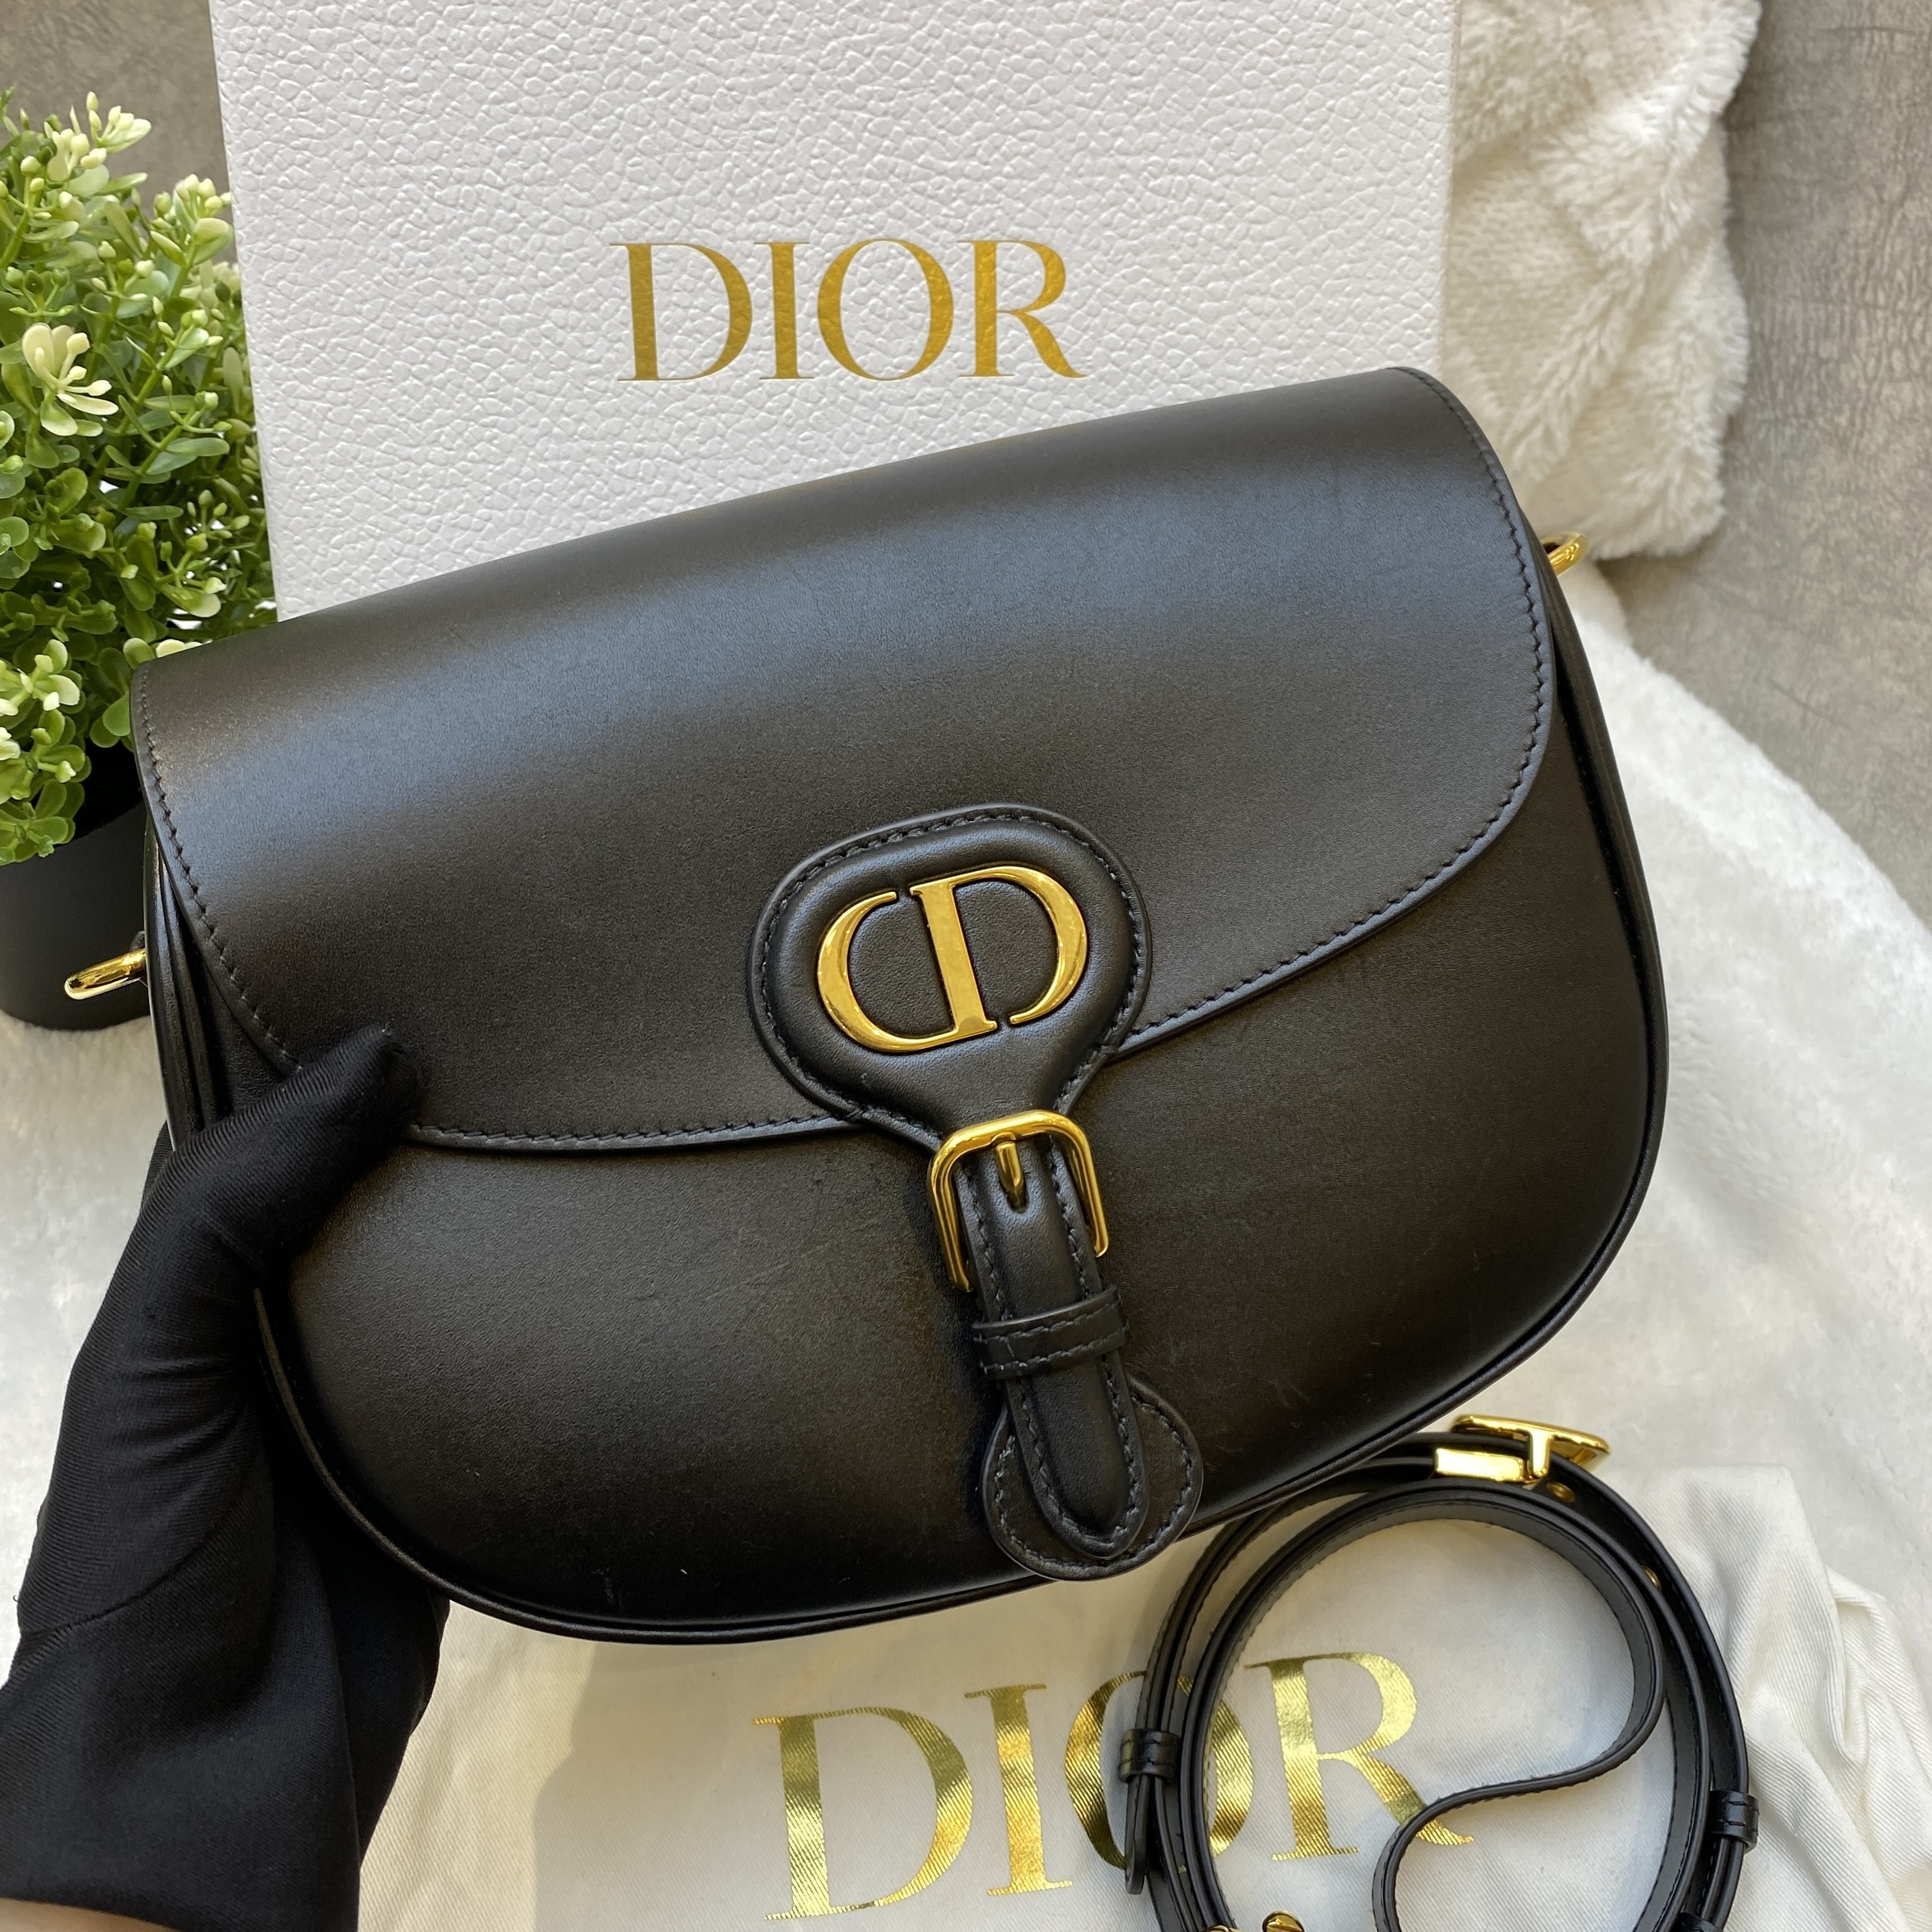 Dior Small Bobby Bag in Black - BagButler